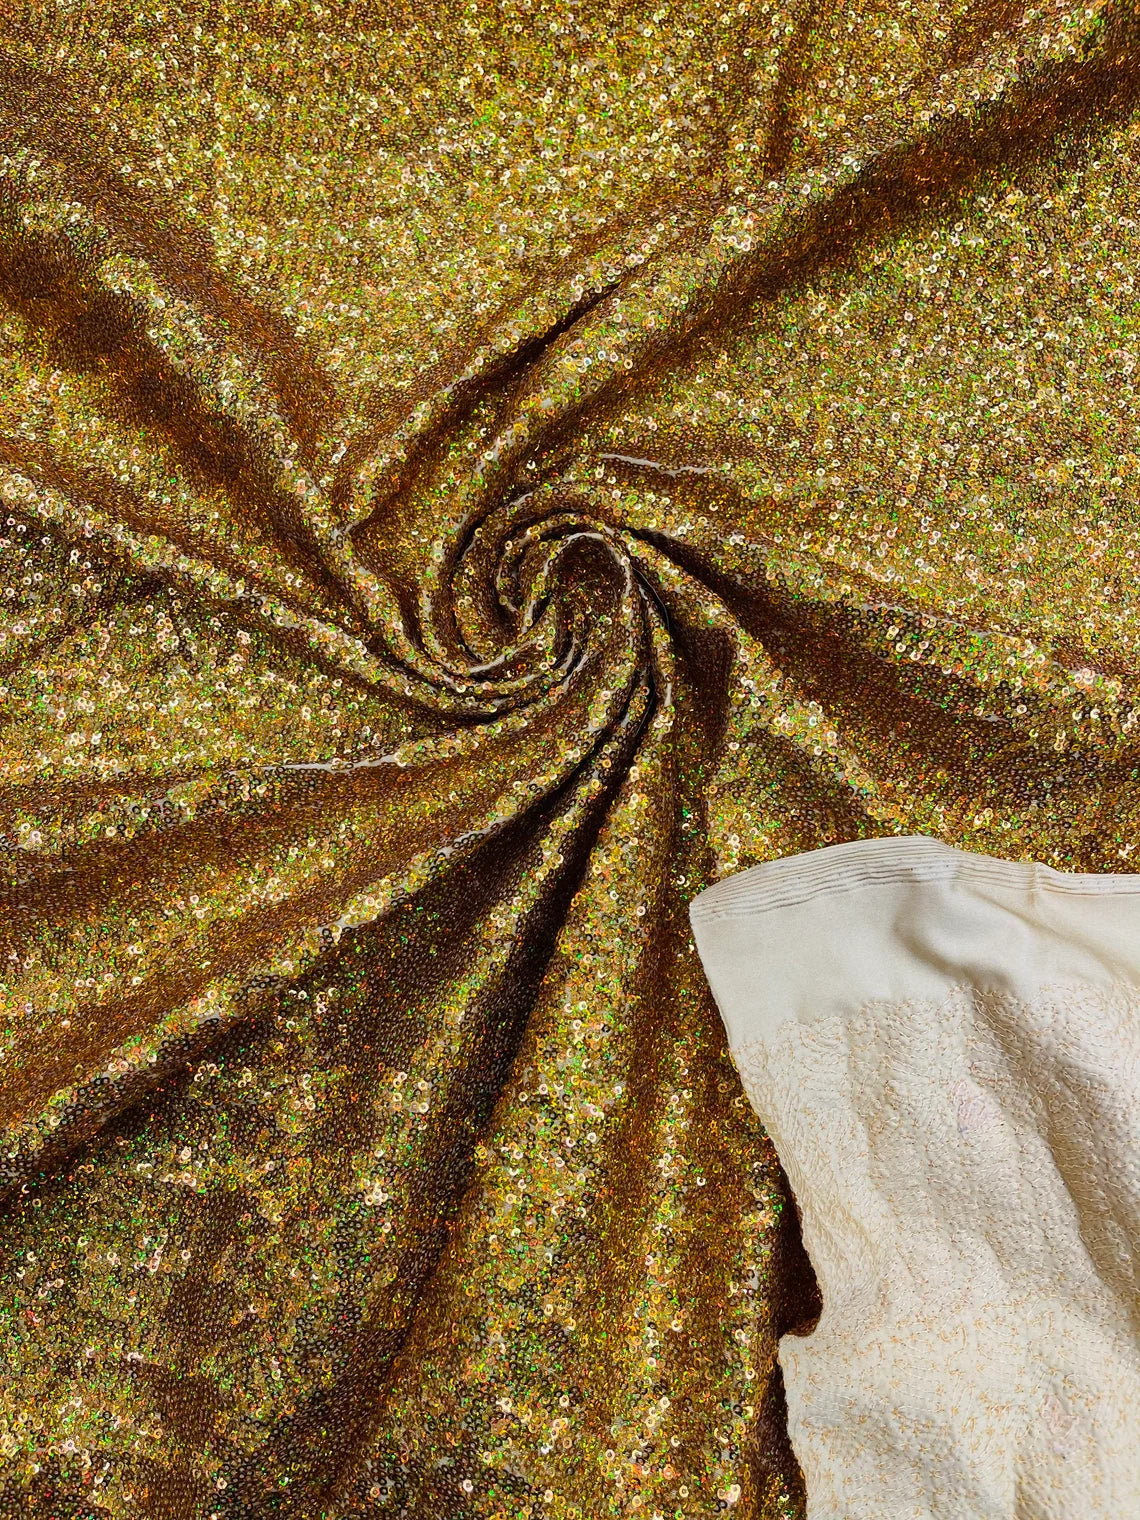 Mini Glitz Sequins on Milliskin - Gold Holographic - 4 Way Stretch Milliskin Stretch Spandex Fabric by Yard